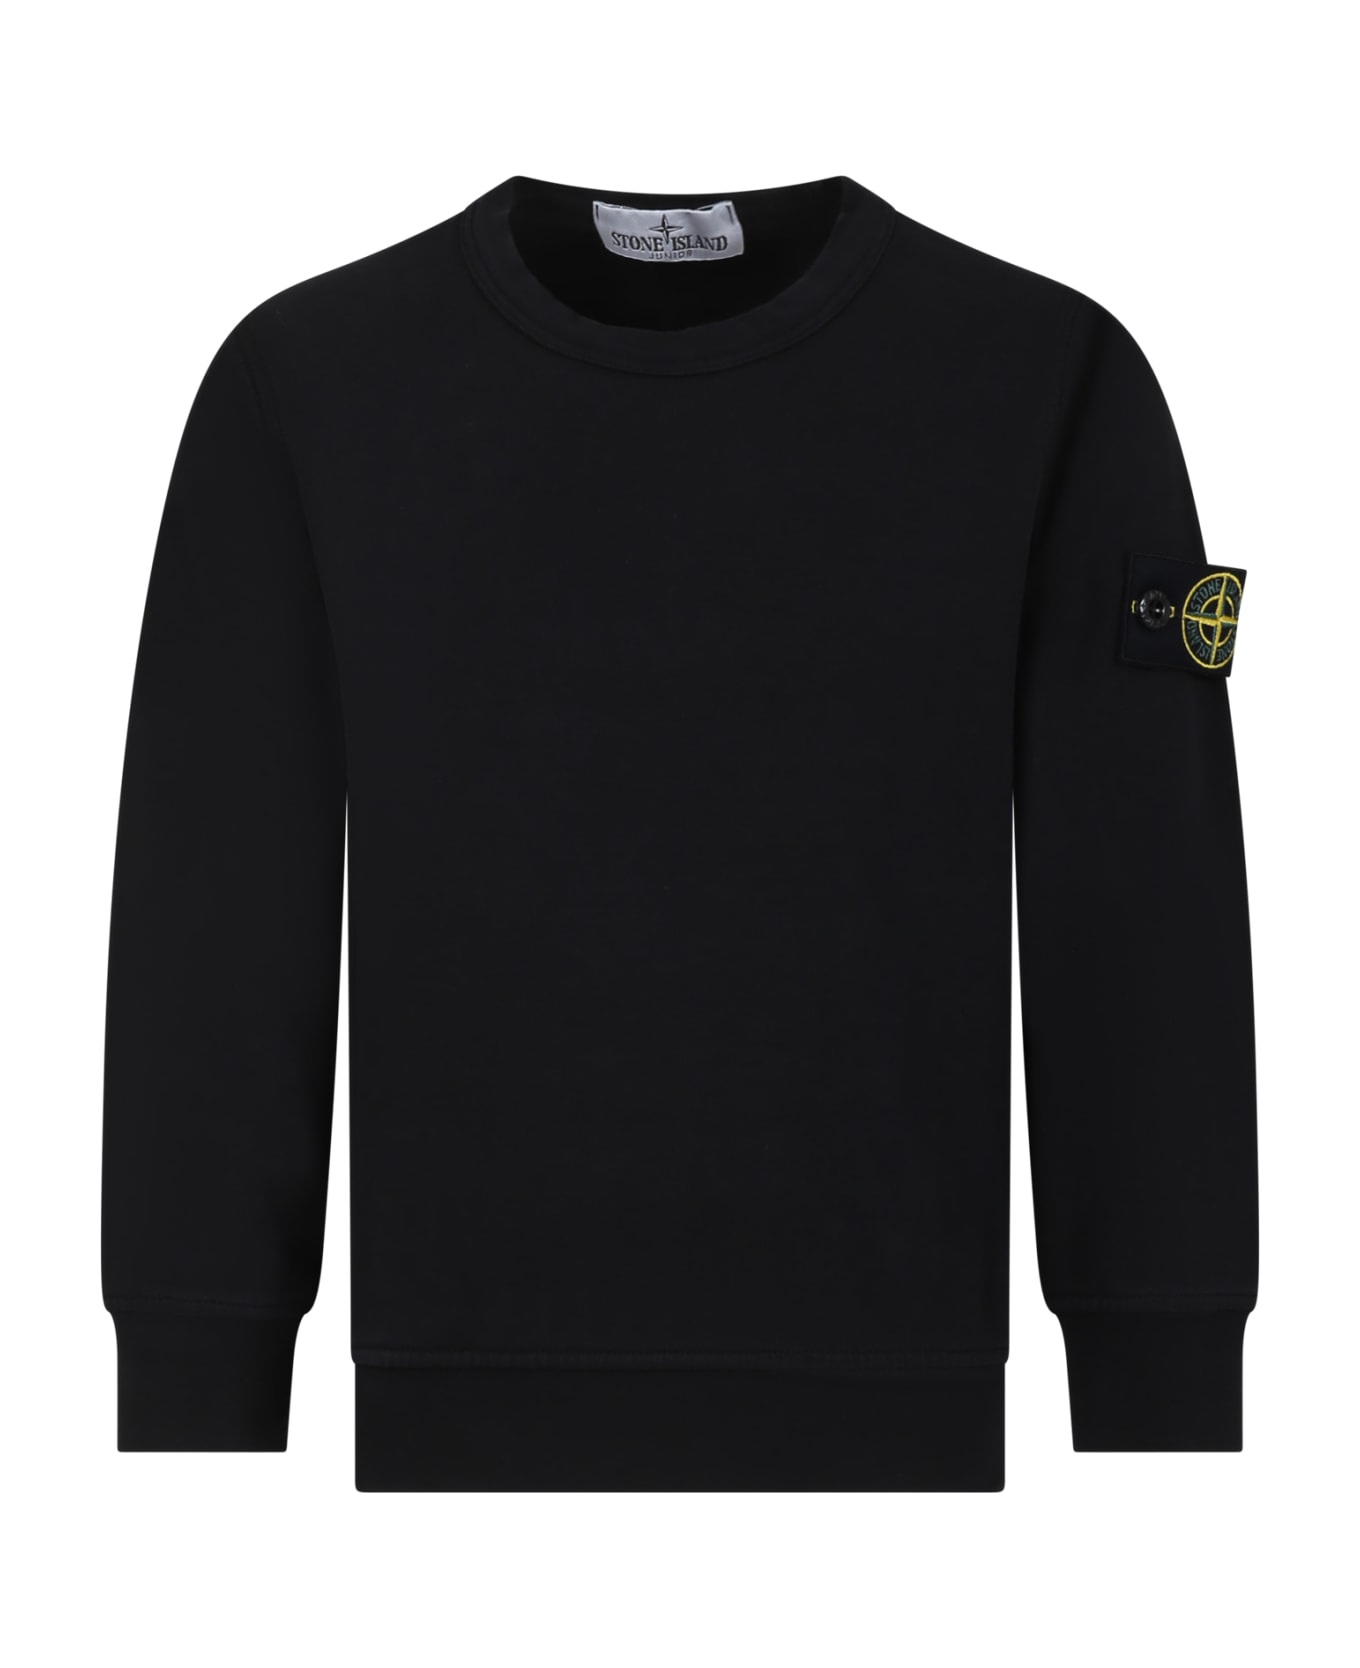 Stone Island Junior Black Sweatshirt For Boy With Iconic Logo - Black